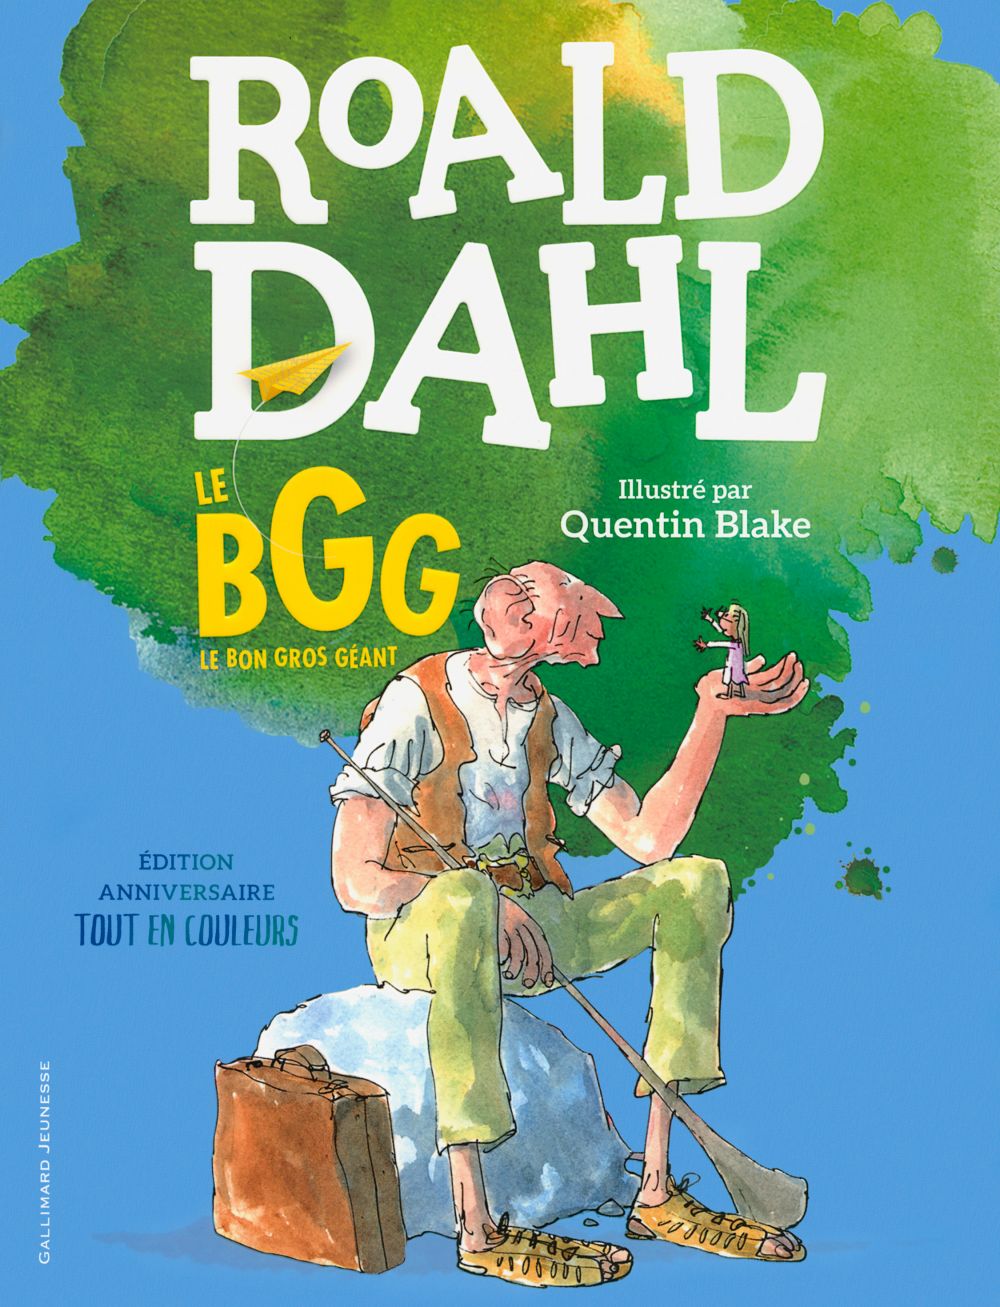 Le Bgg Le Bon Gros Geant Edition Illustree Anniversaire Quentin Blake Roald Dahl Cultura